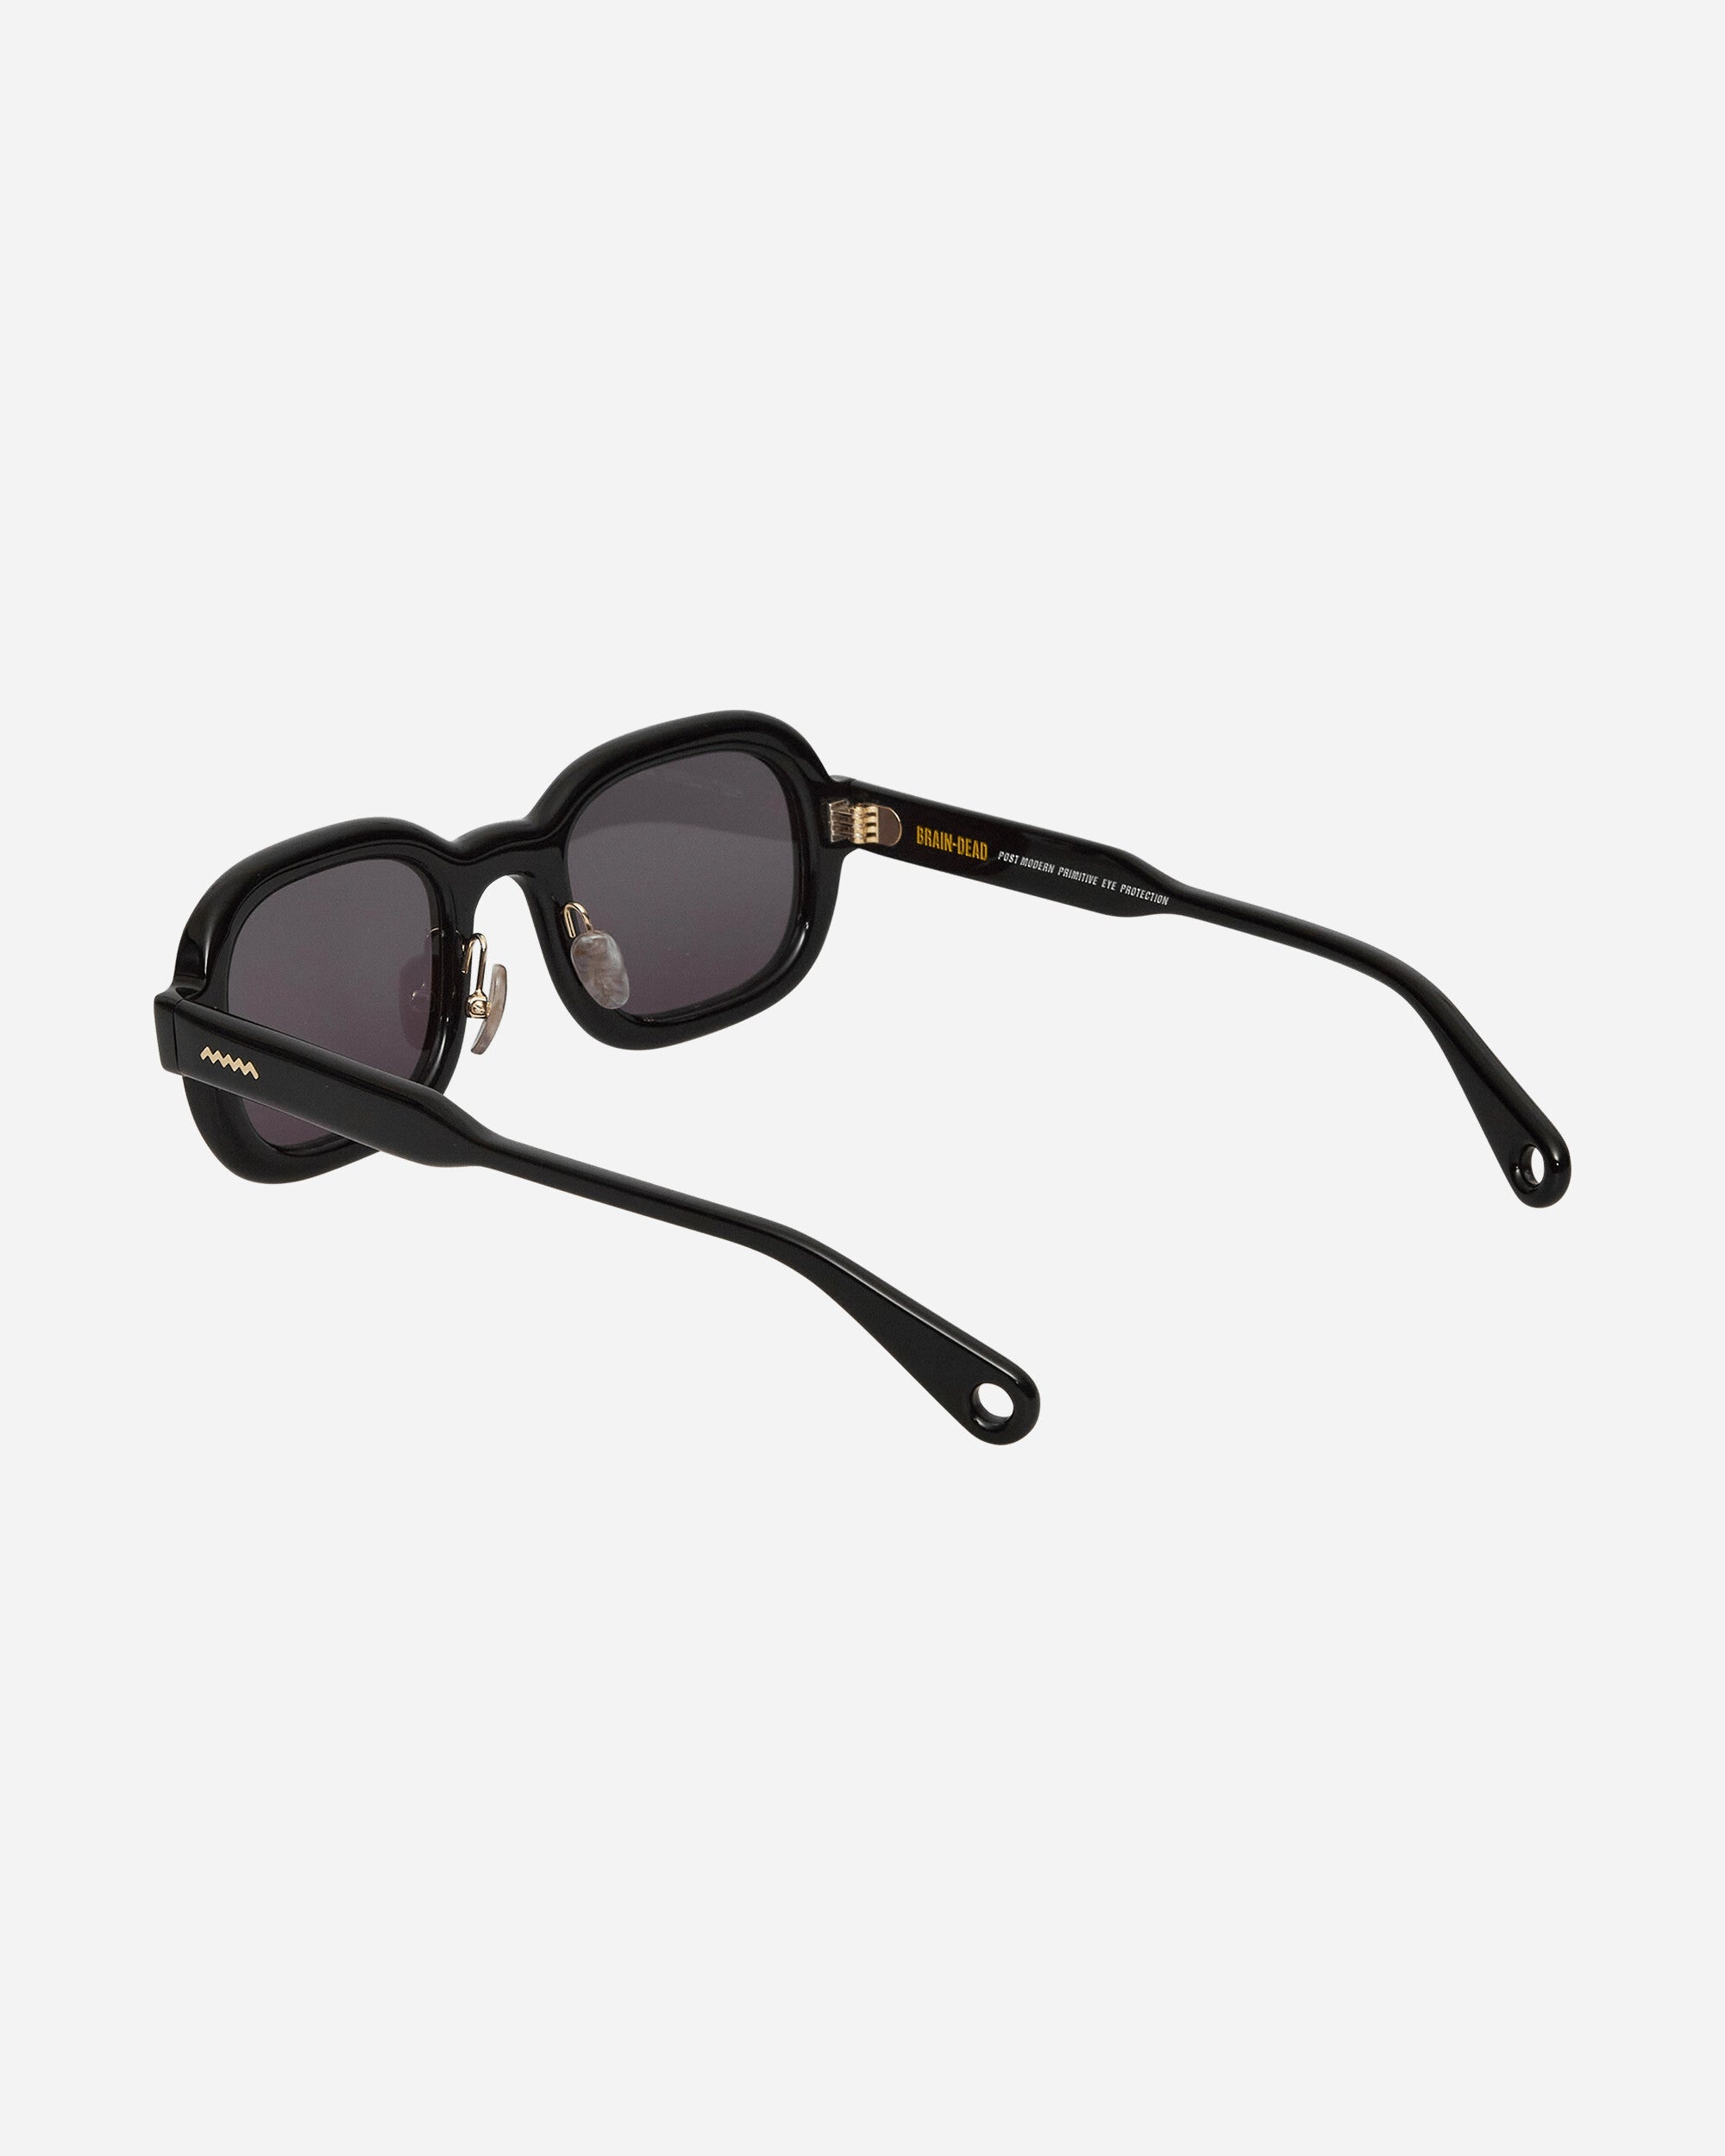 Newman Post Modern Primitive Eye Protection Sunglasses Black - 4